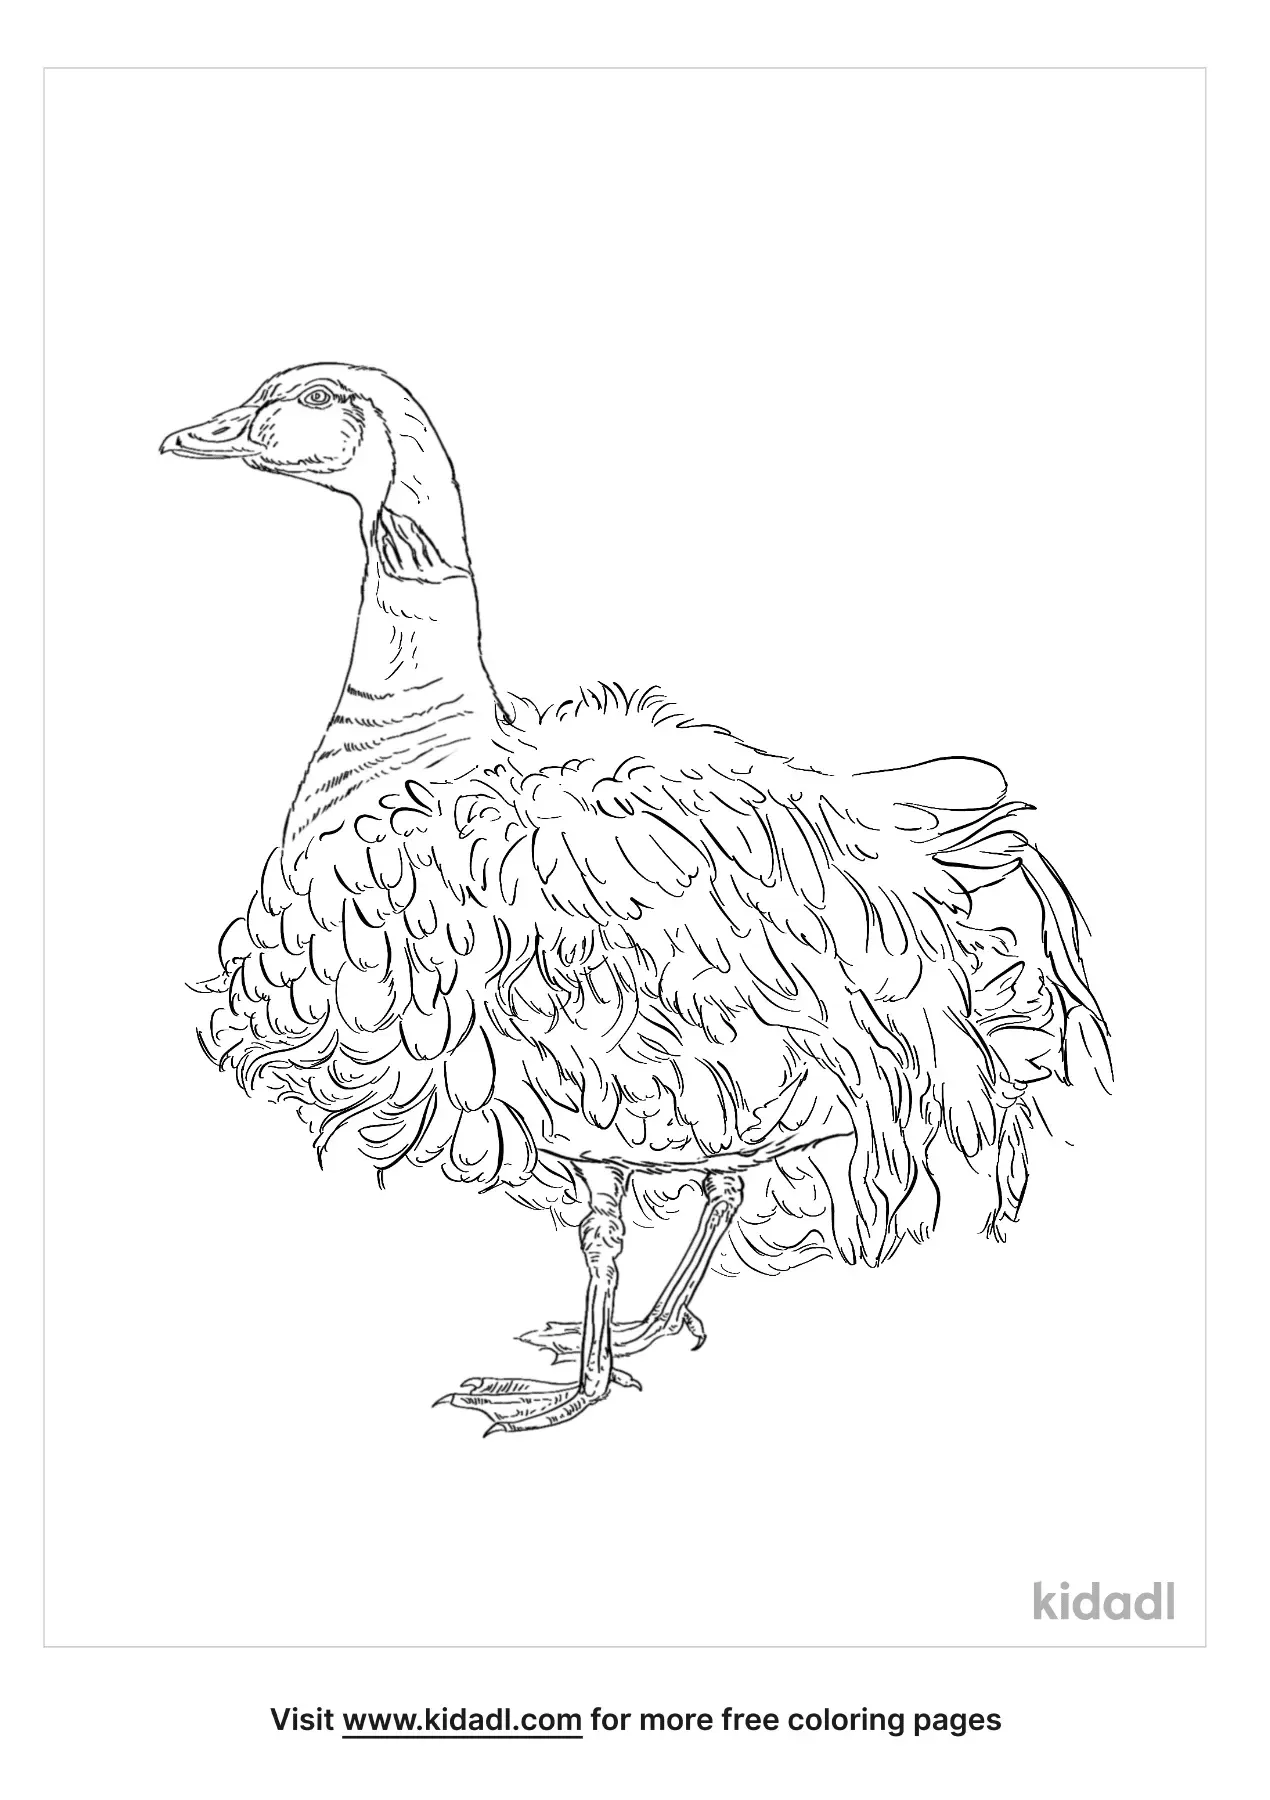 Free Sebastopol Geese Coloring Page | Coloring Page Printables | Kidadl